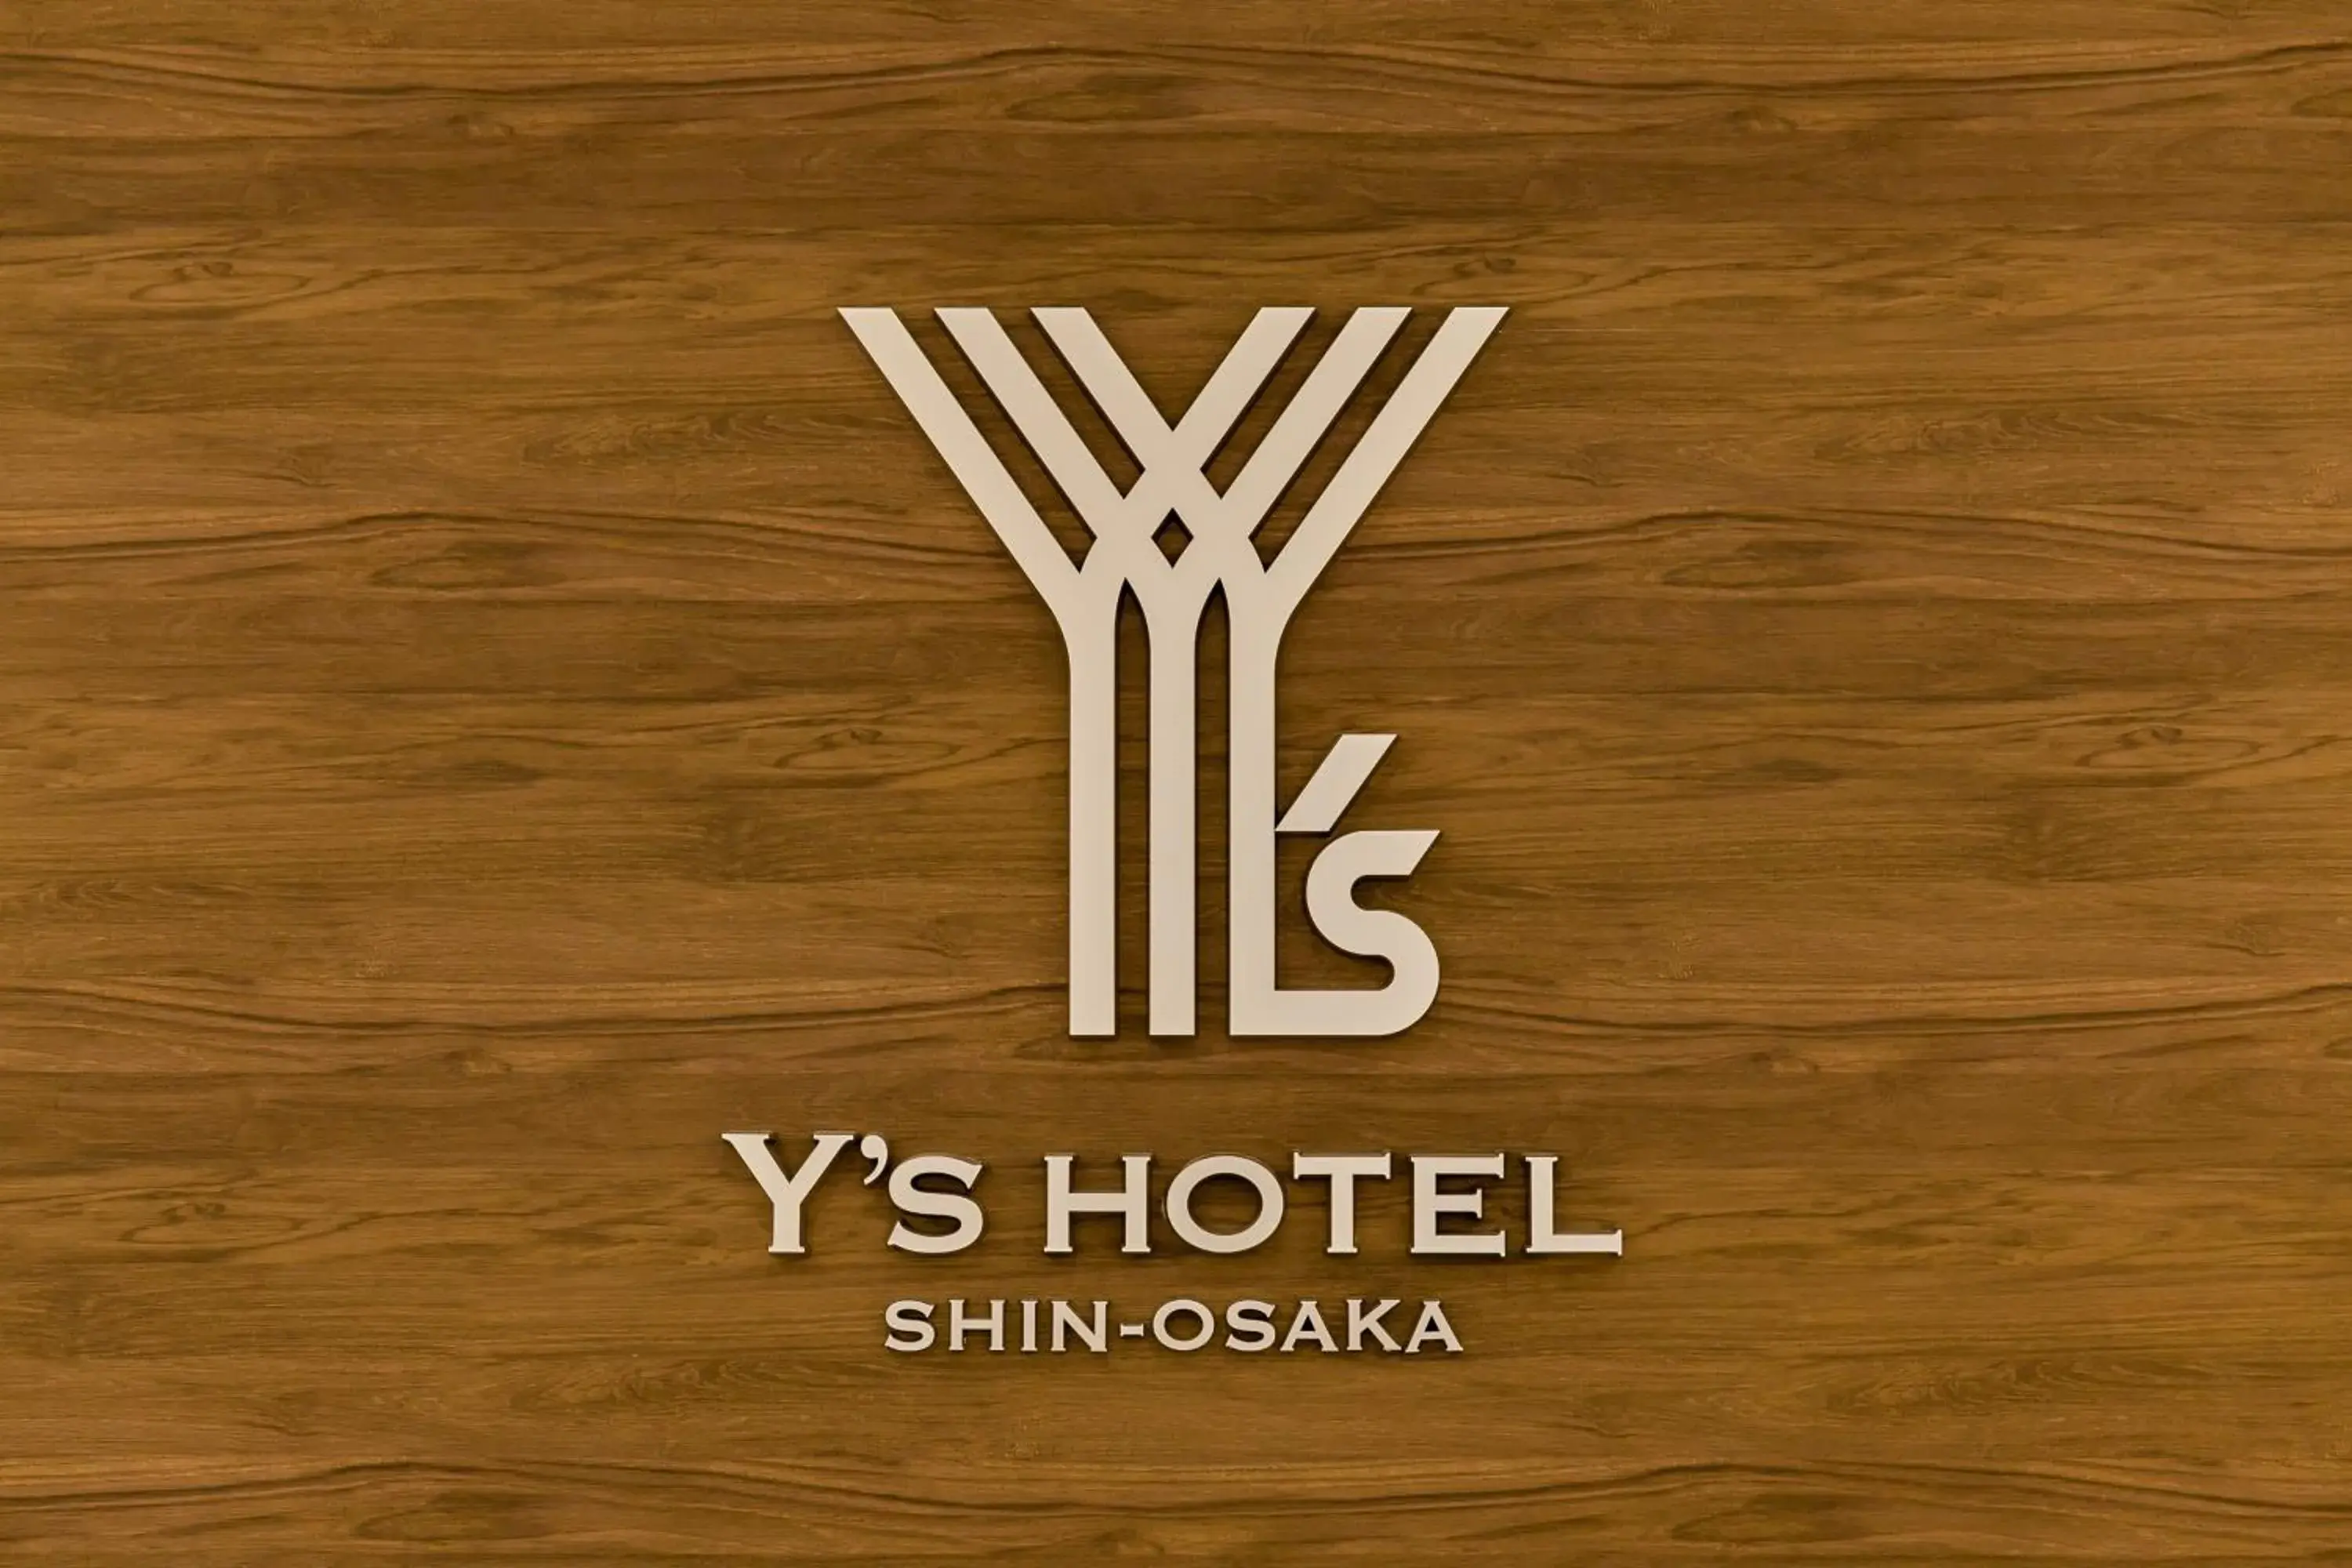 Property logo or sign in Y's Hotel Shin-Osaka